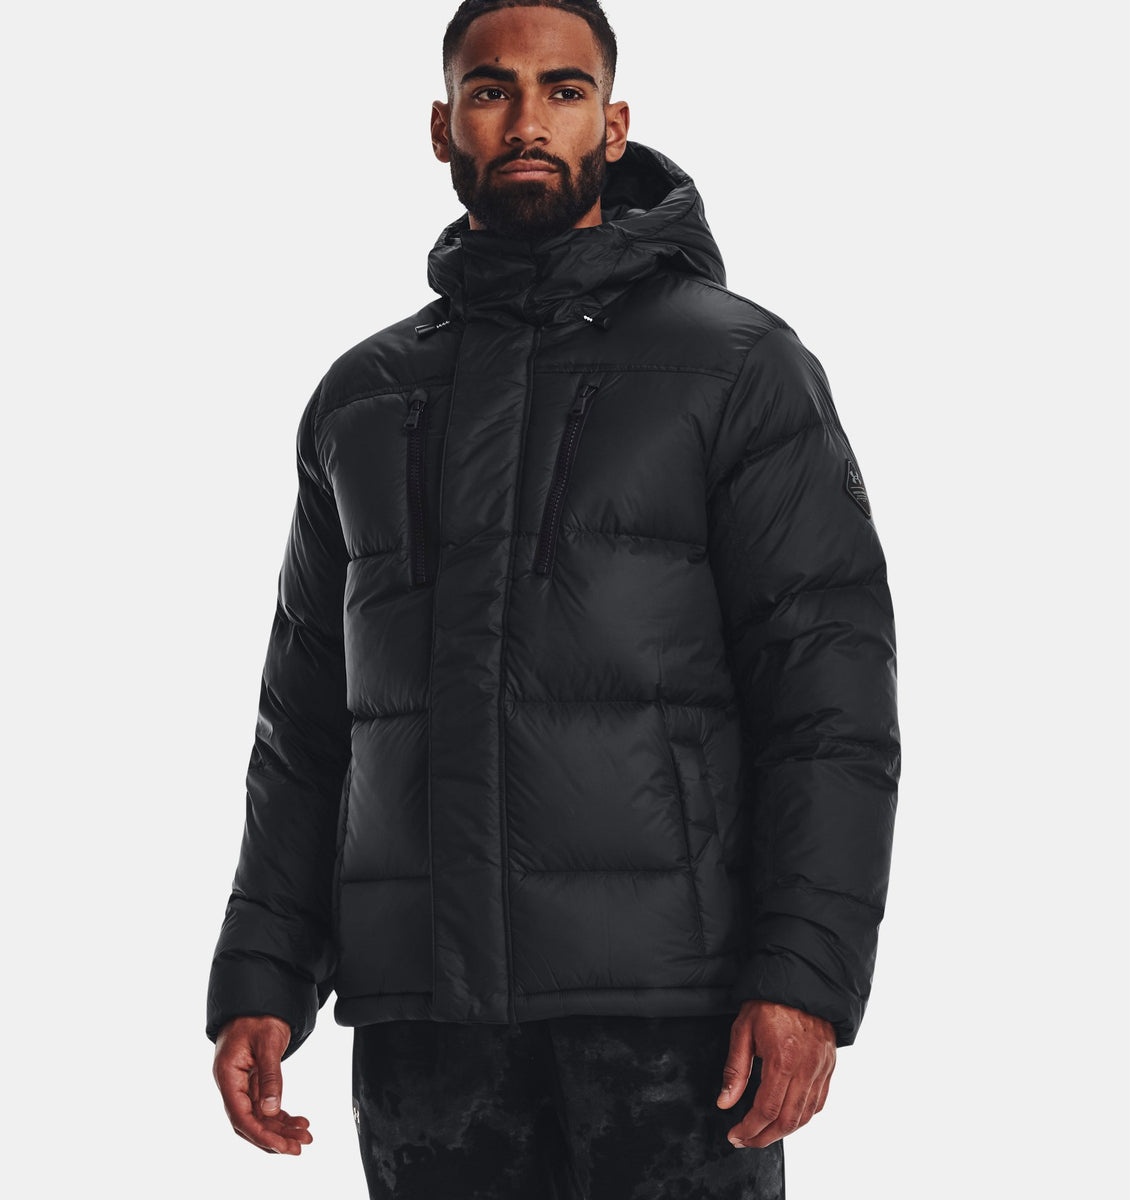 Men's Under Armour ColdGear® Infrared Shield Softshell Jacket New 2XL -  Green